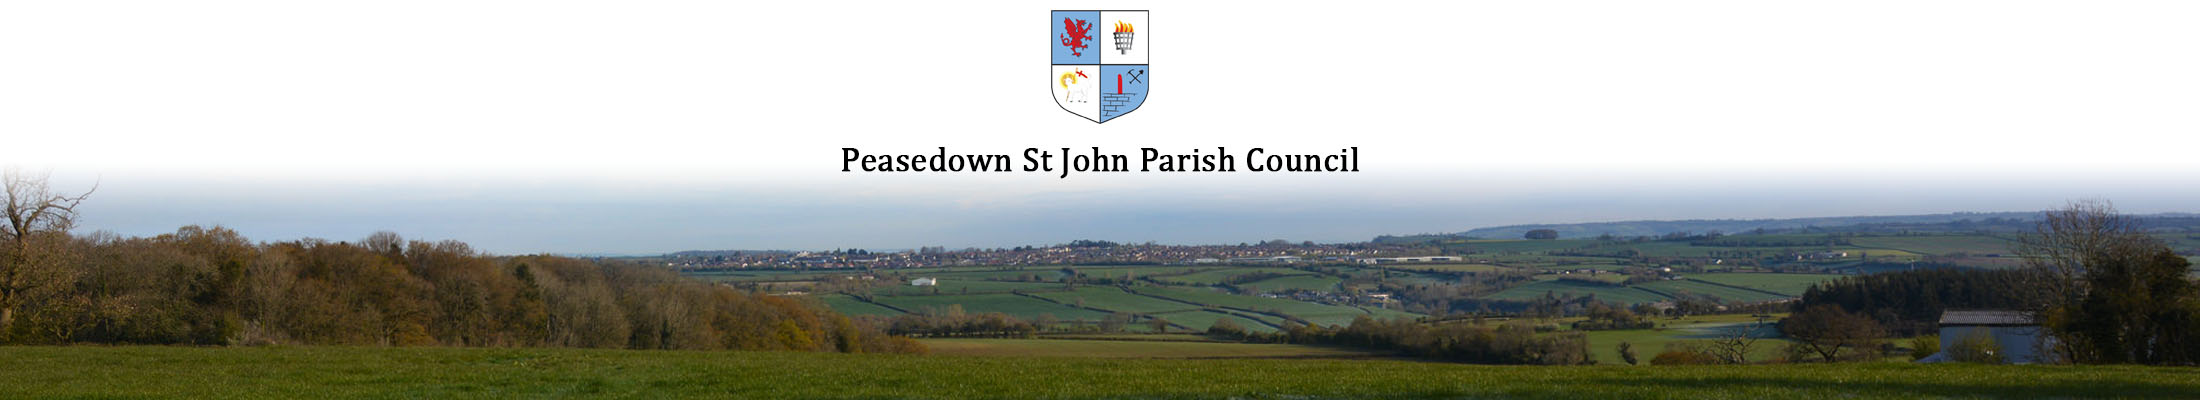 Header Image for Peasedown St John Parish Council